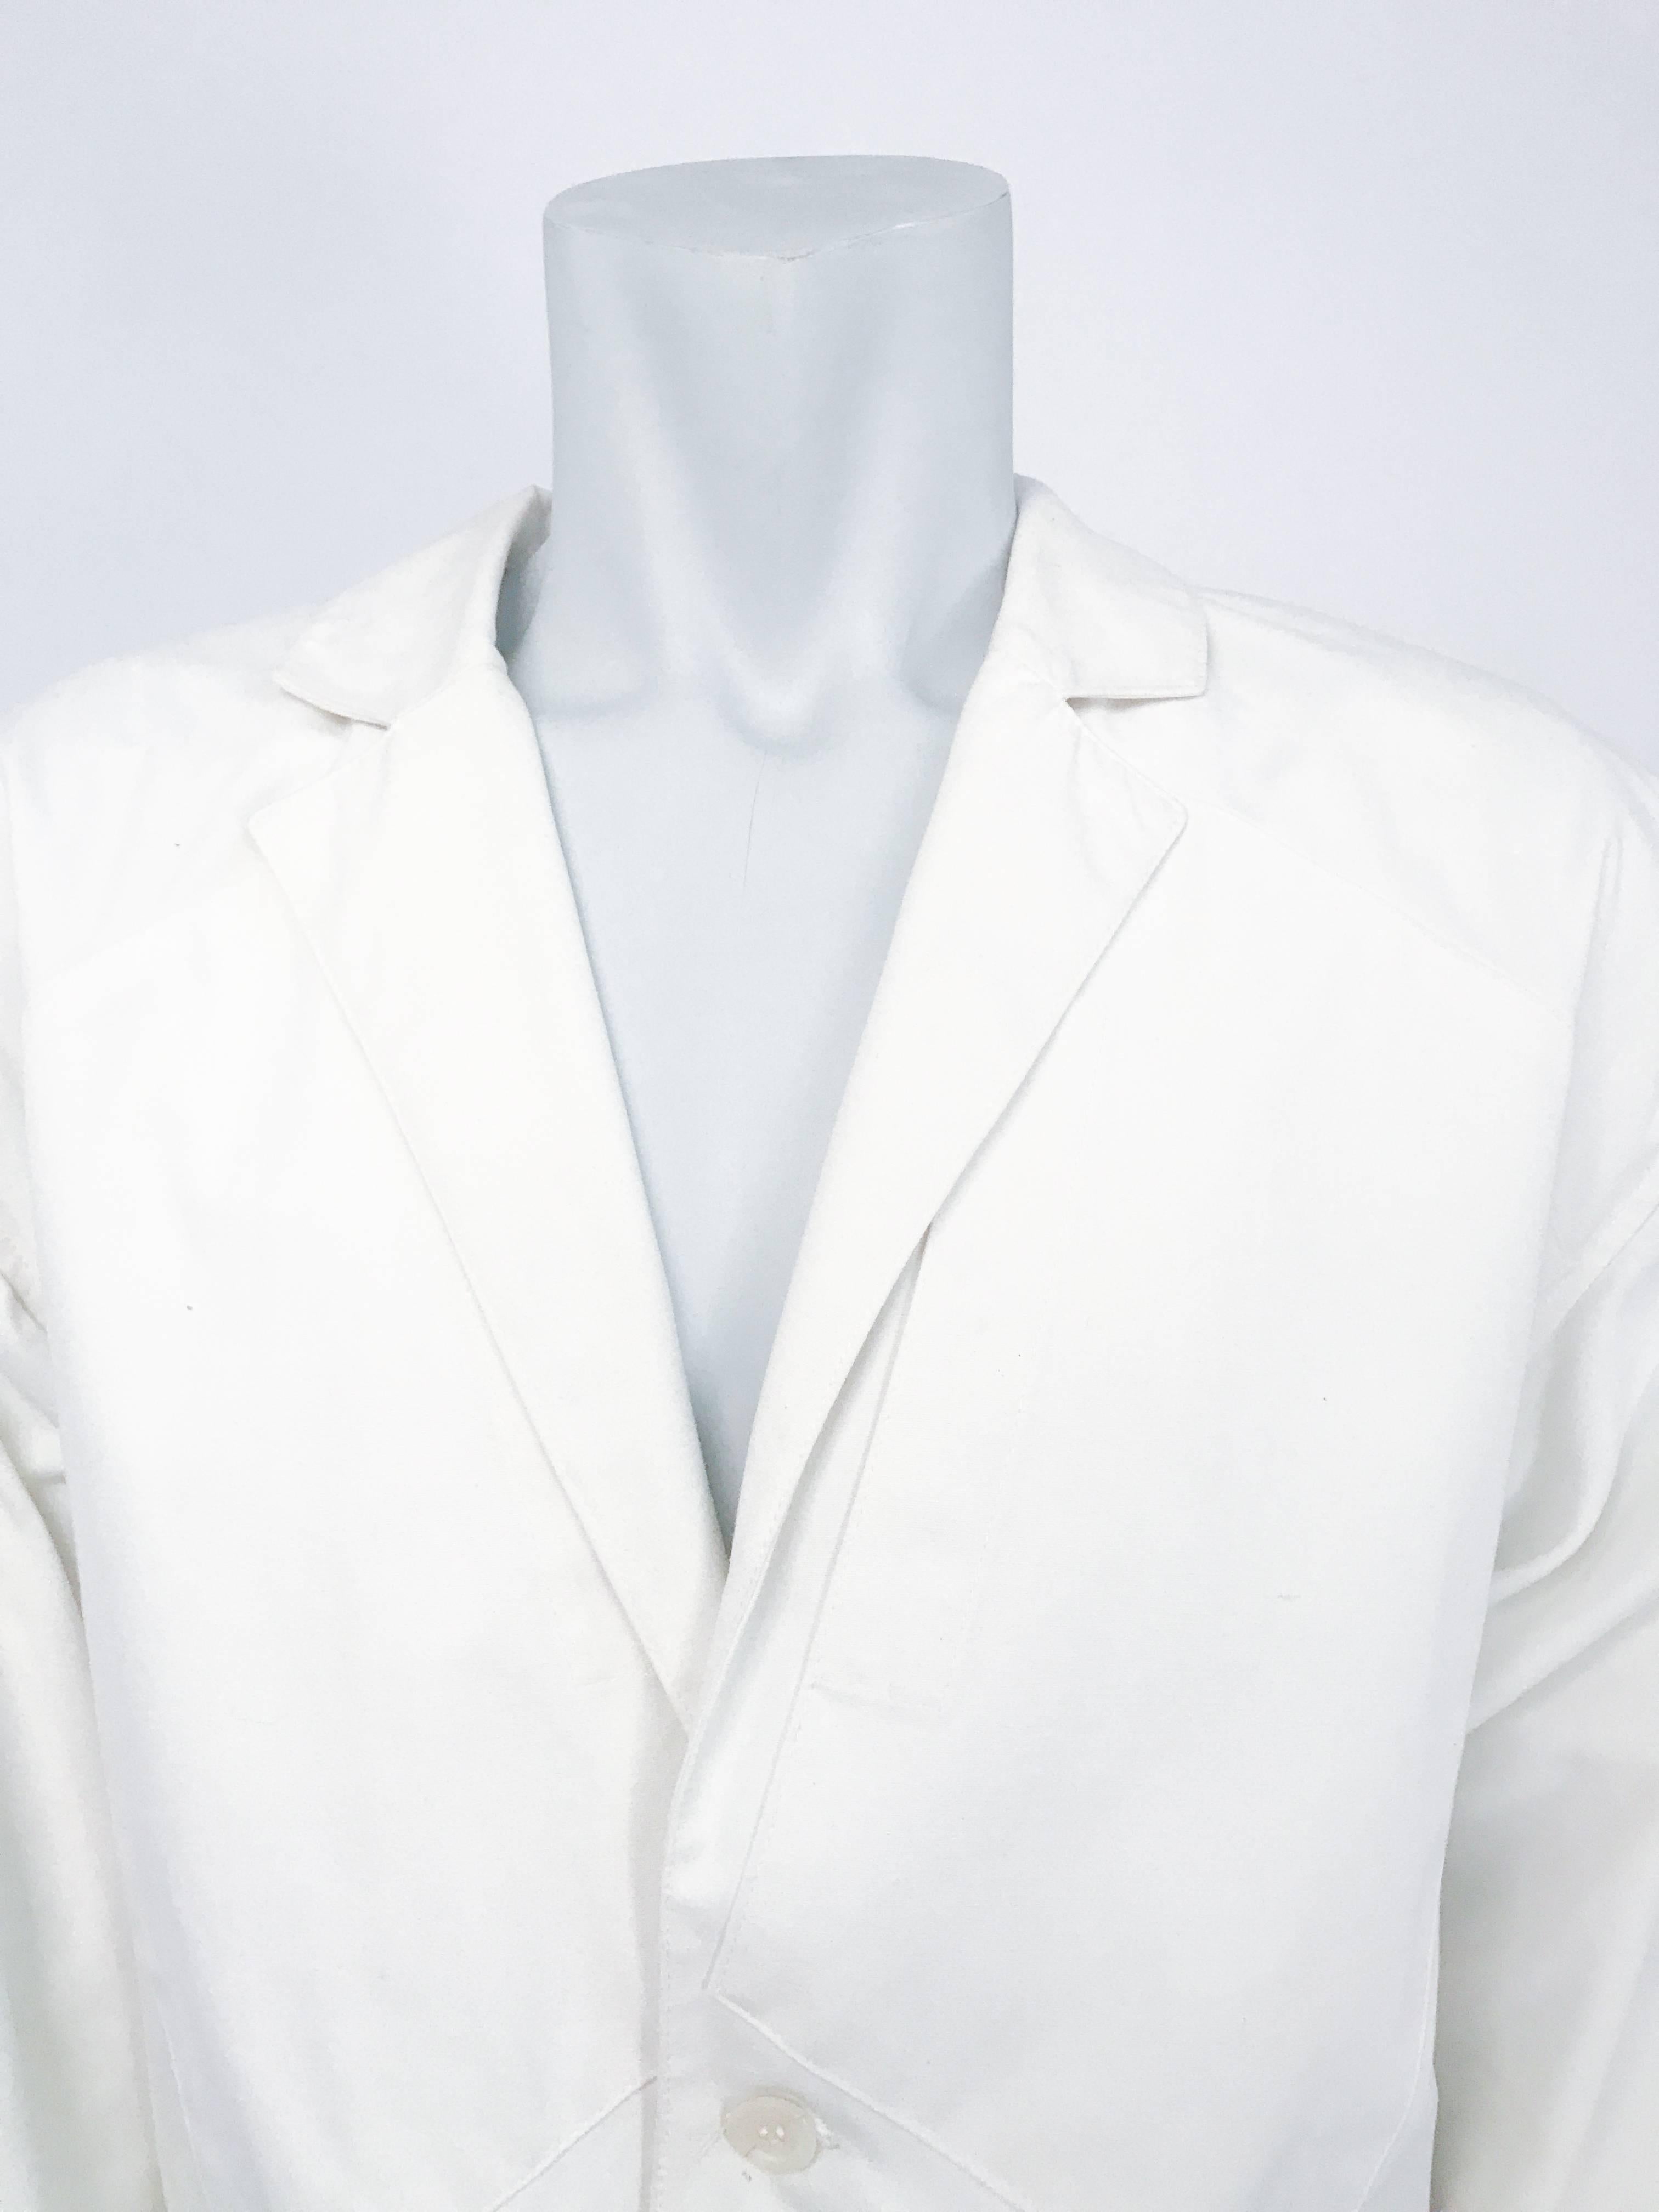 1980s Jean Charles De Castelbajac White Jacket. White jacket with stylistically over-sized pockets.